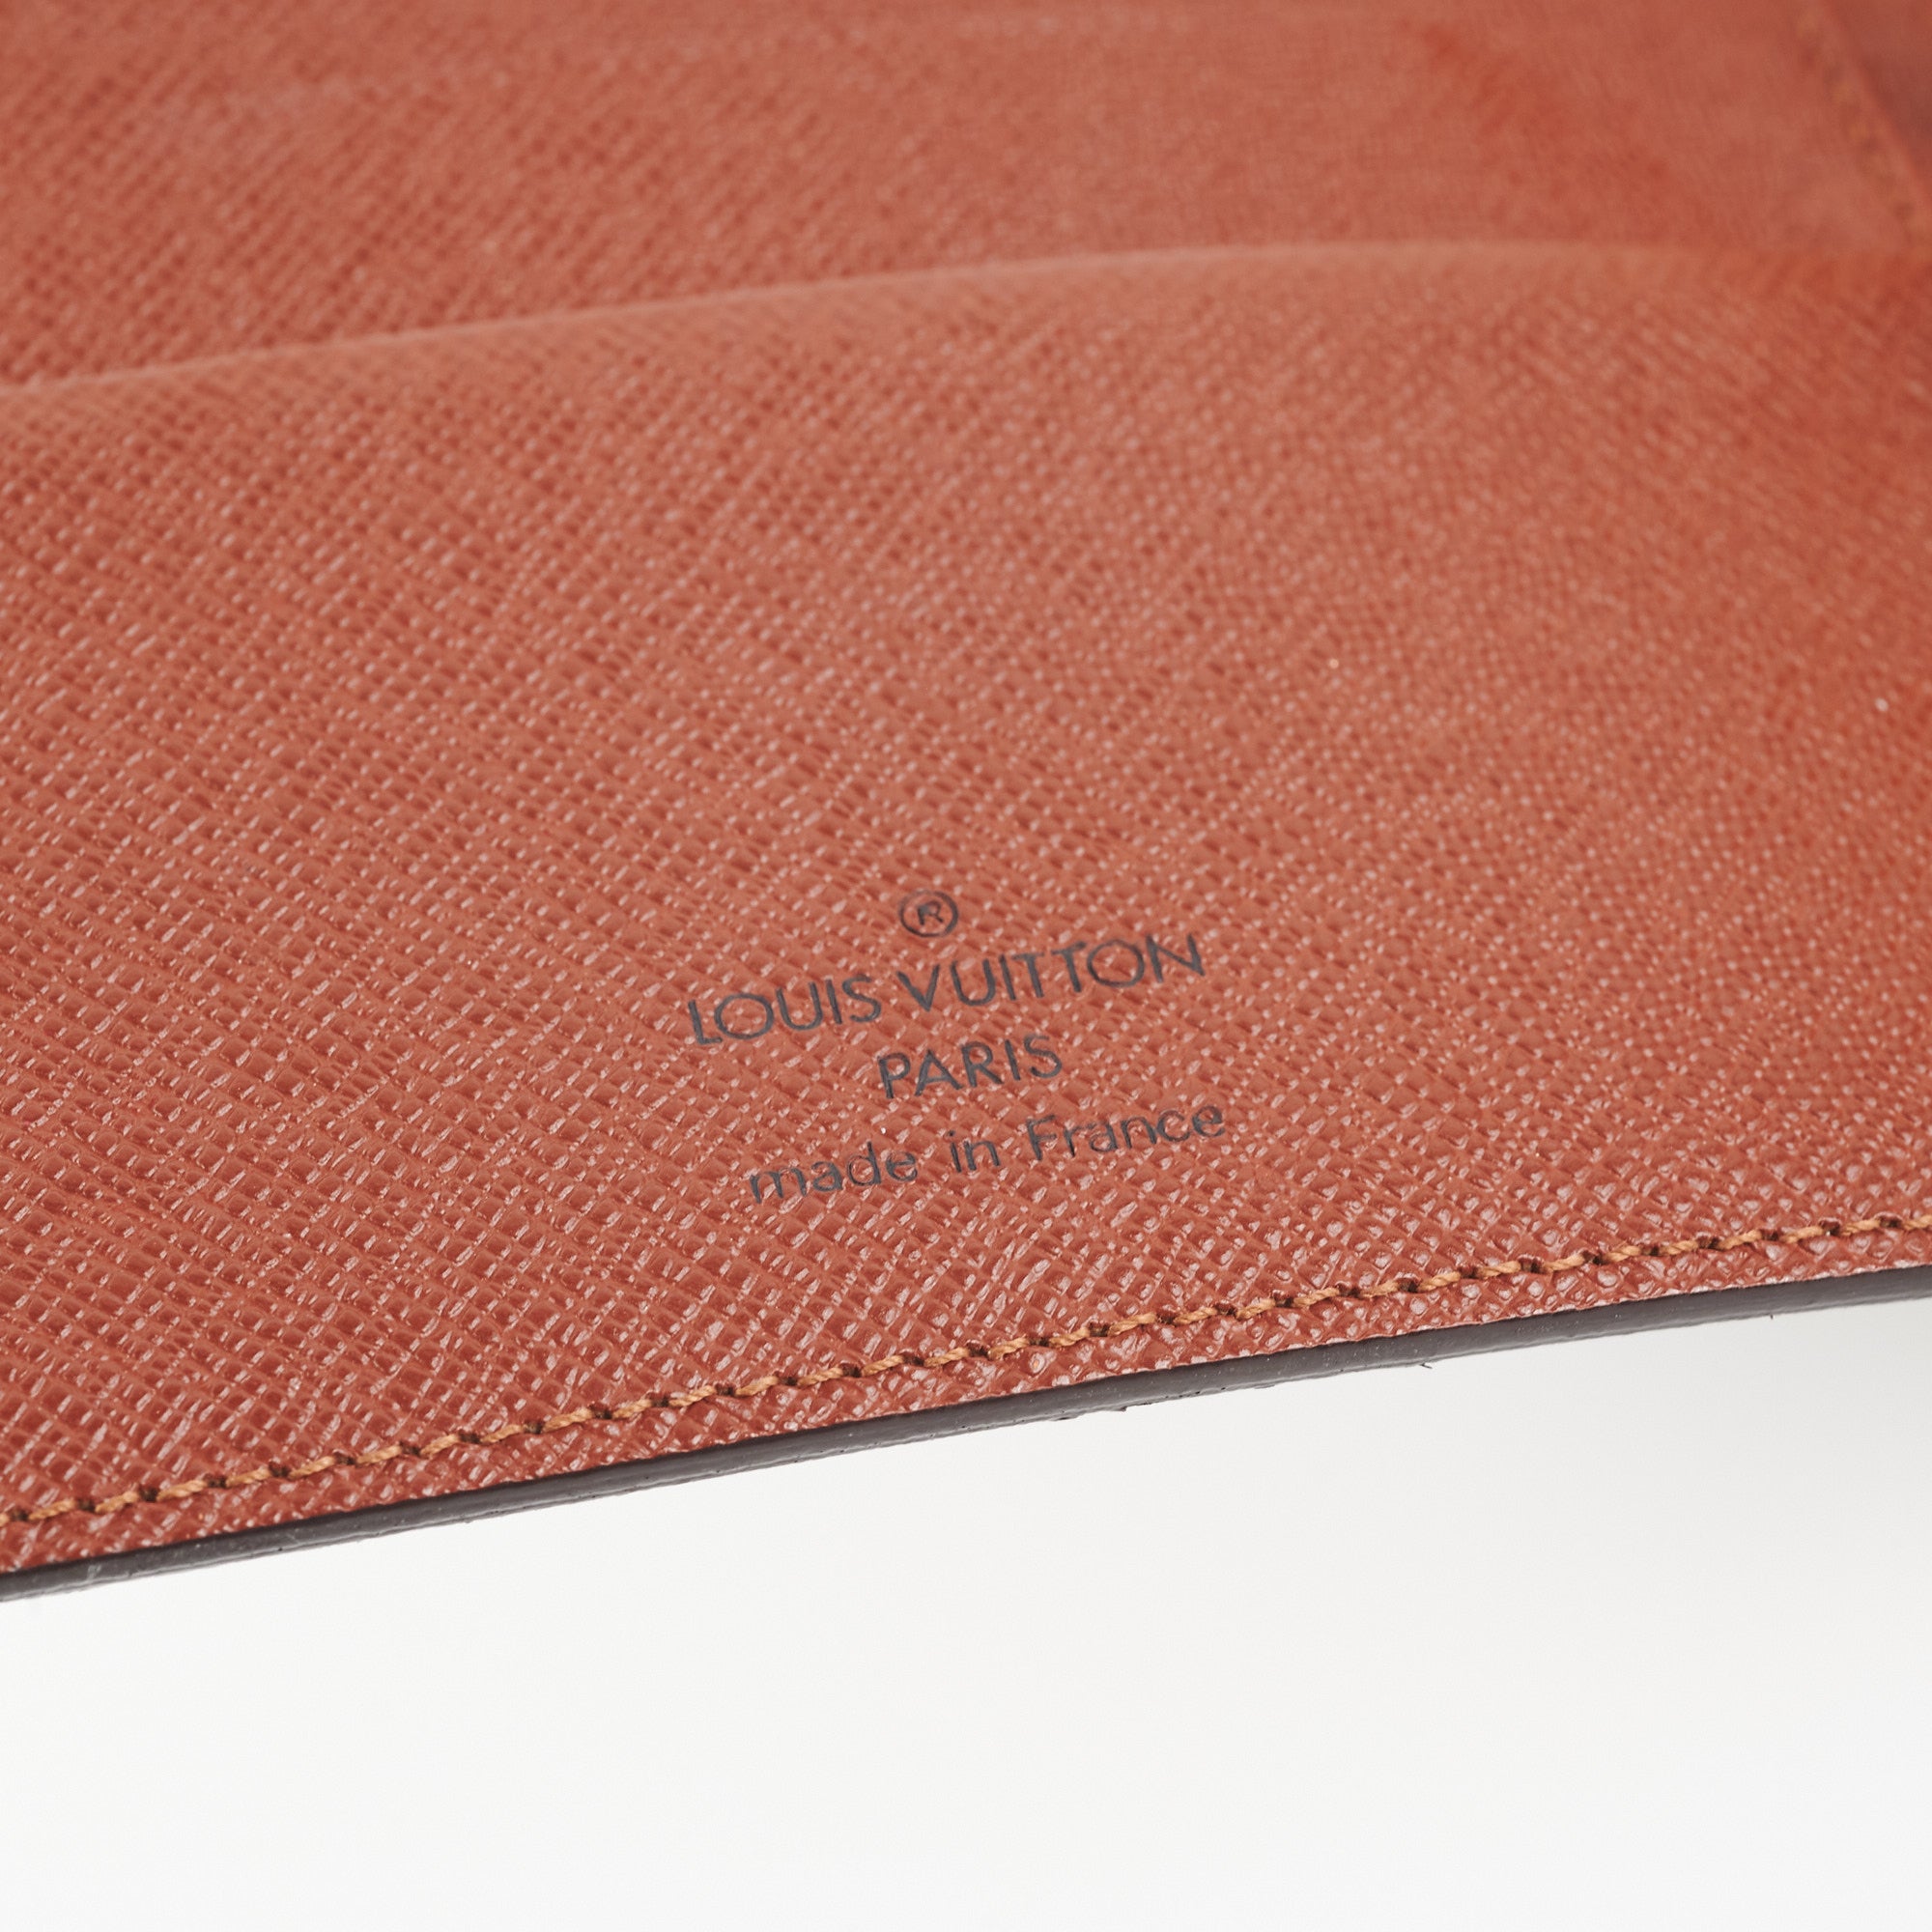 LOUIS VUITTON Monogram Agenda MM – The Luxury Lady